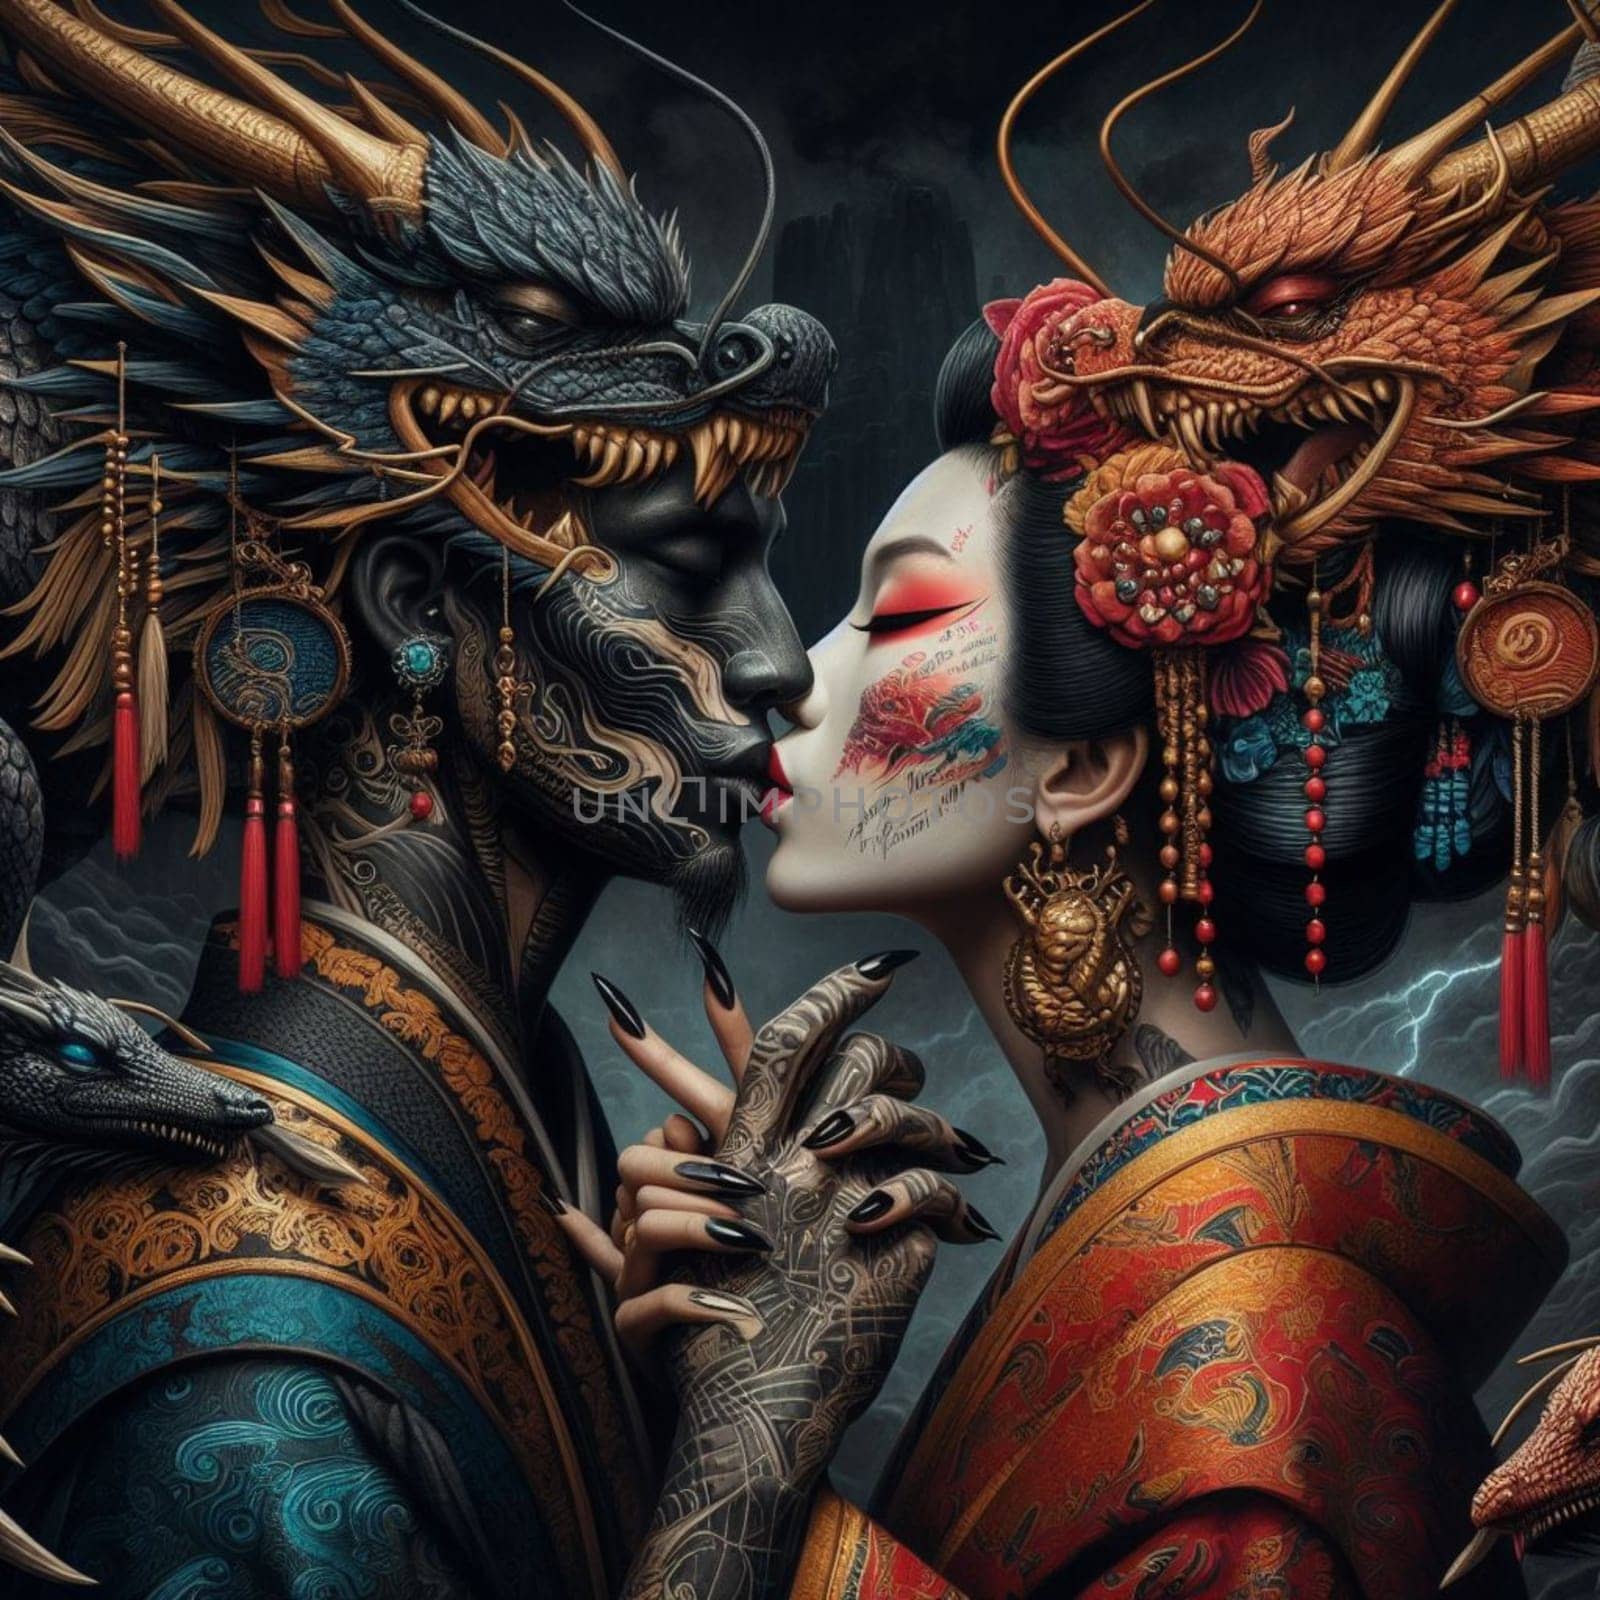 punk porcelain geisha make up tattoed model kiss bond powerful dragon chinese creature valentines by verbano